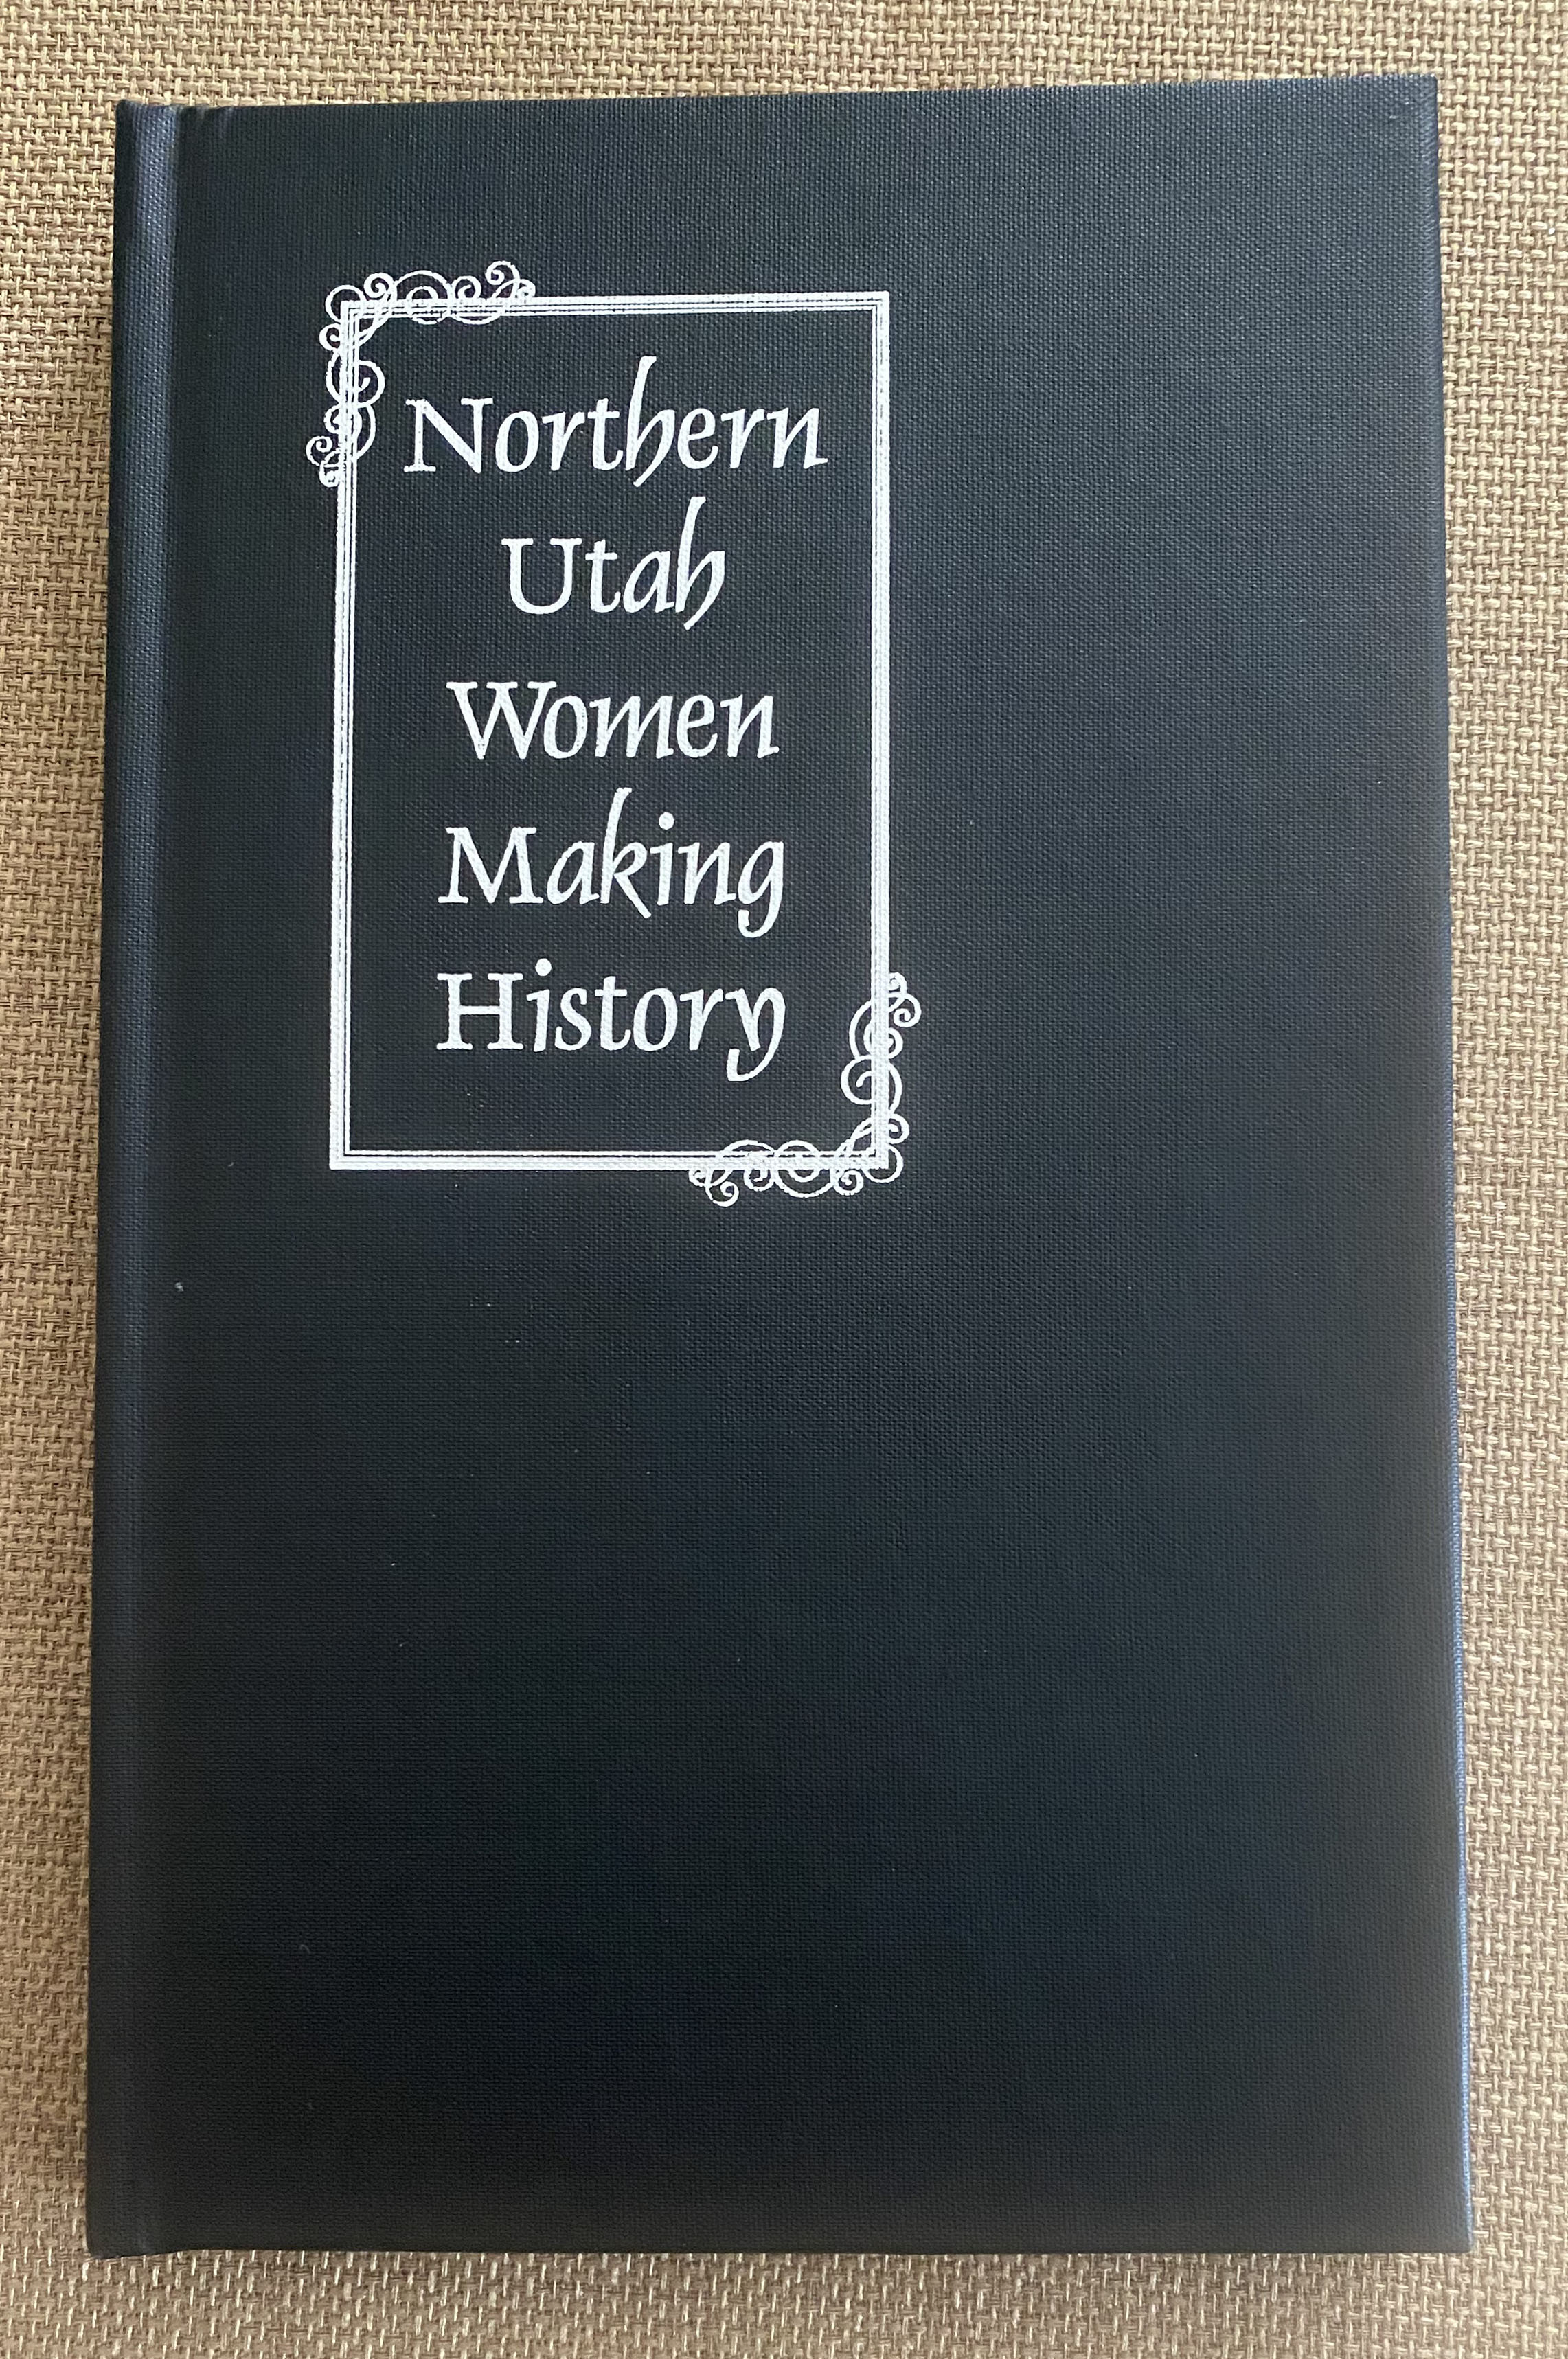 Book: Northern Utah Women Making History